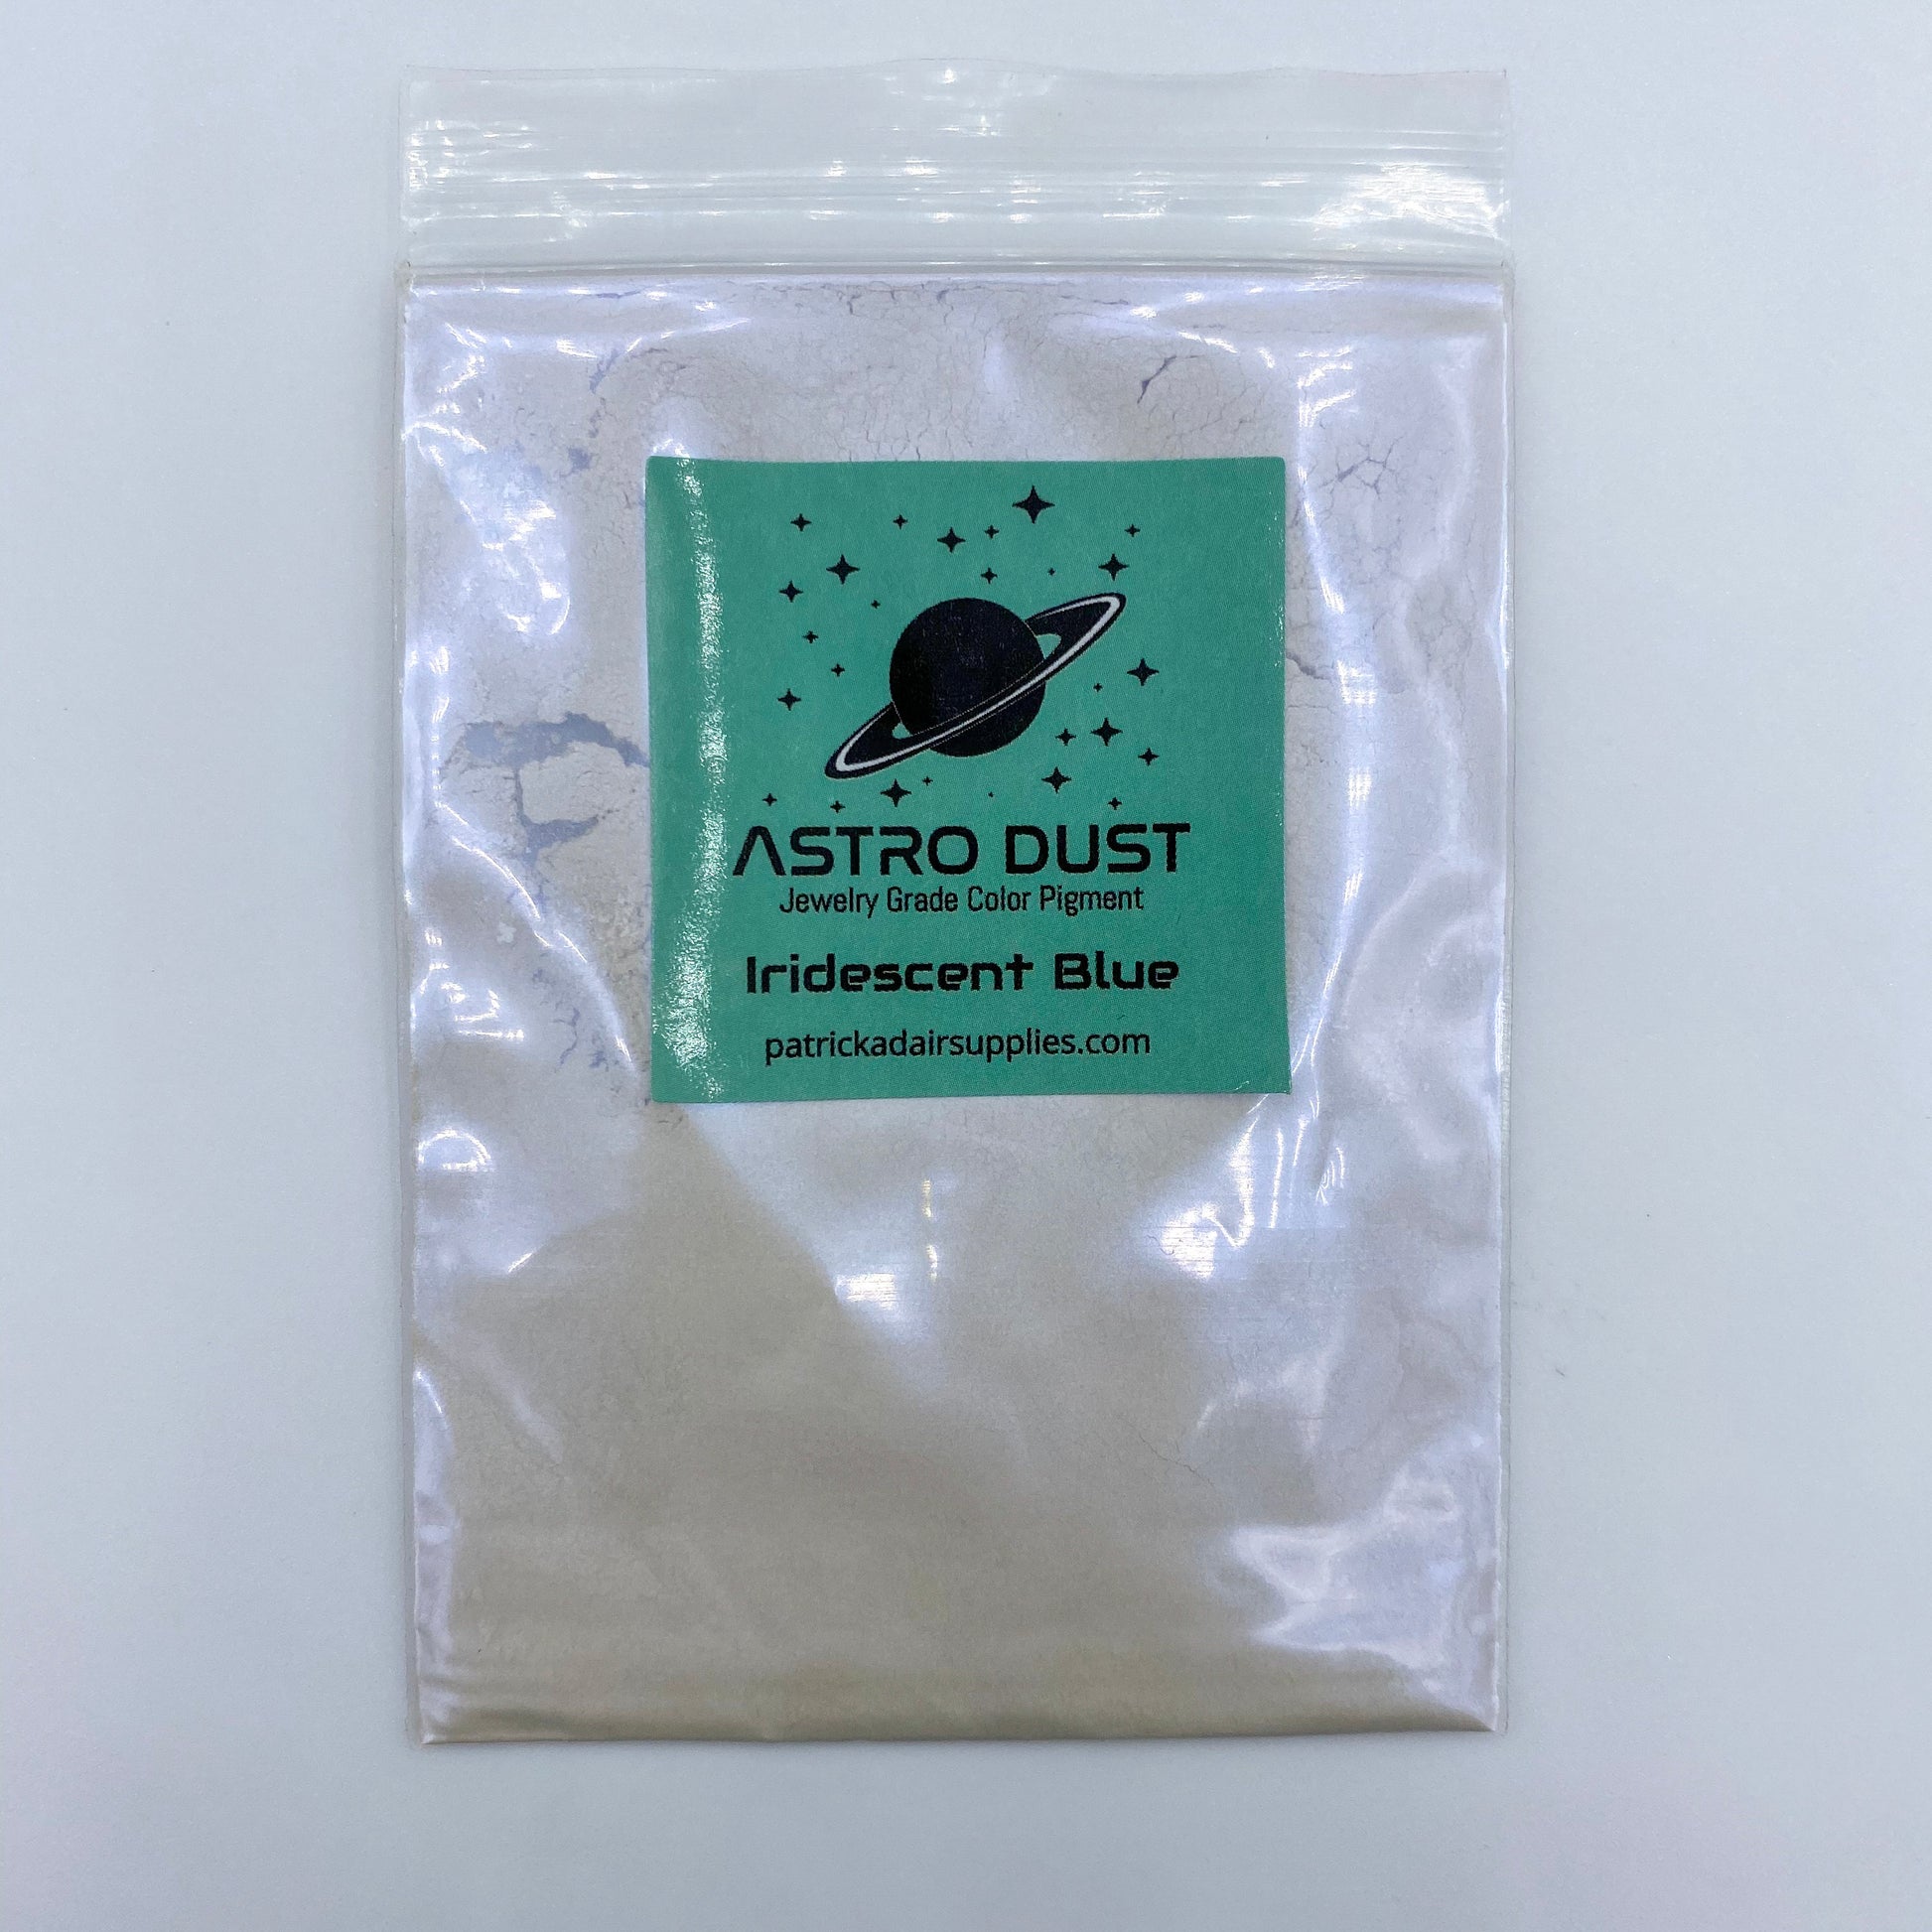 Astro Dust Iridescent Blue Color Pigment - Patrick Adair Supplies